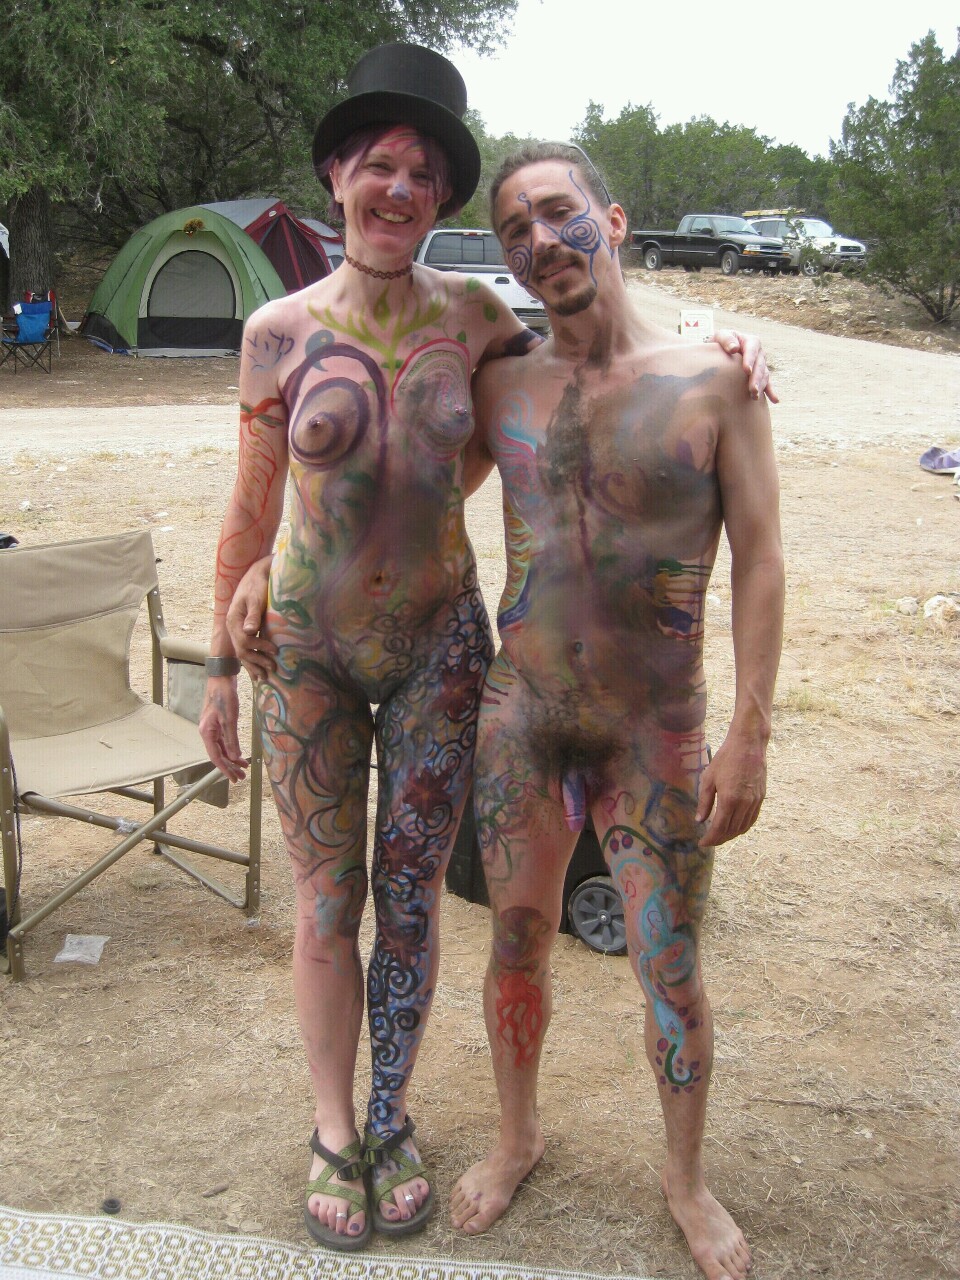 https://www.nudismlife.com/galleries/nudists_and_nude/nudists_couple/nudists_nude_naturists_couple_0551.jpg